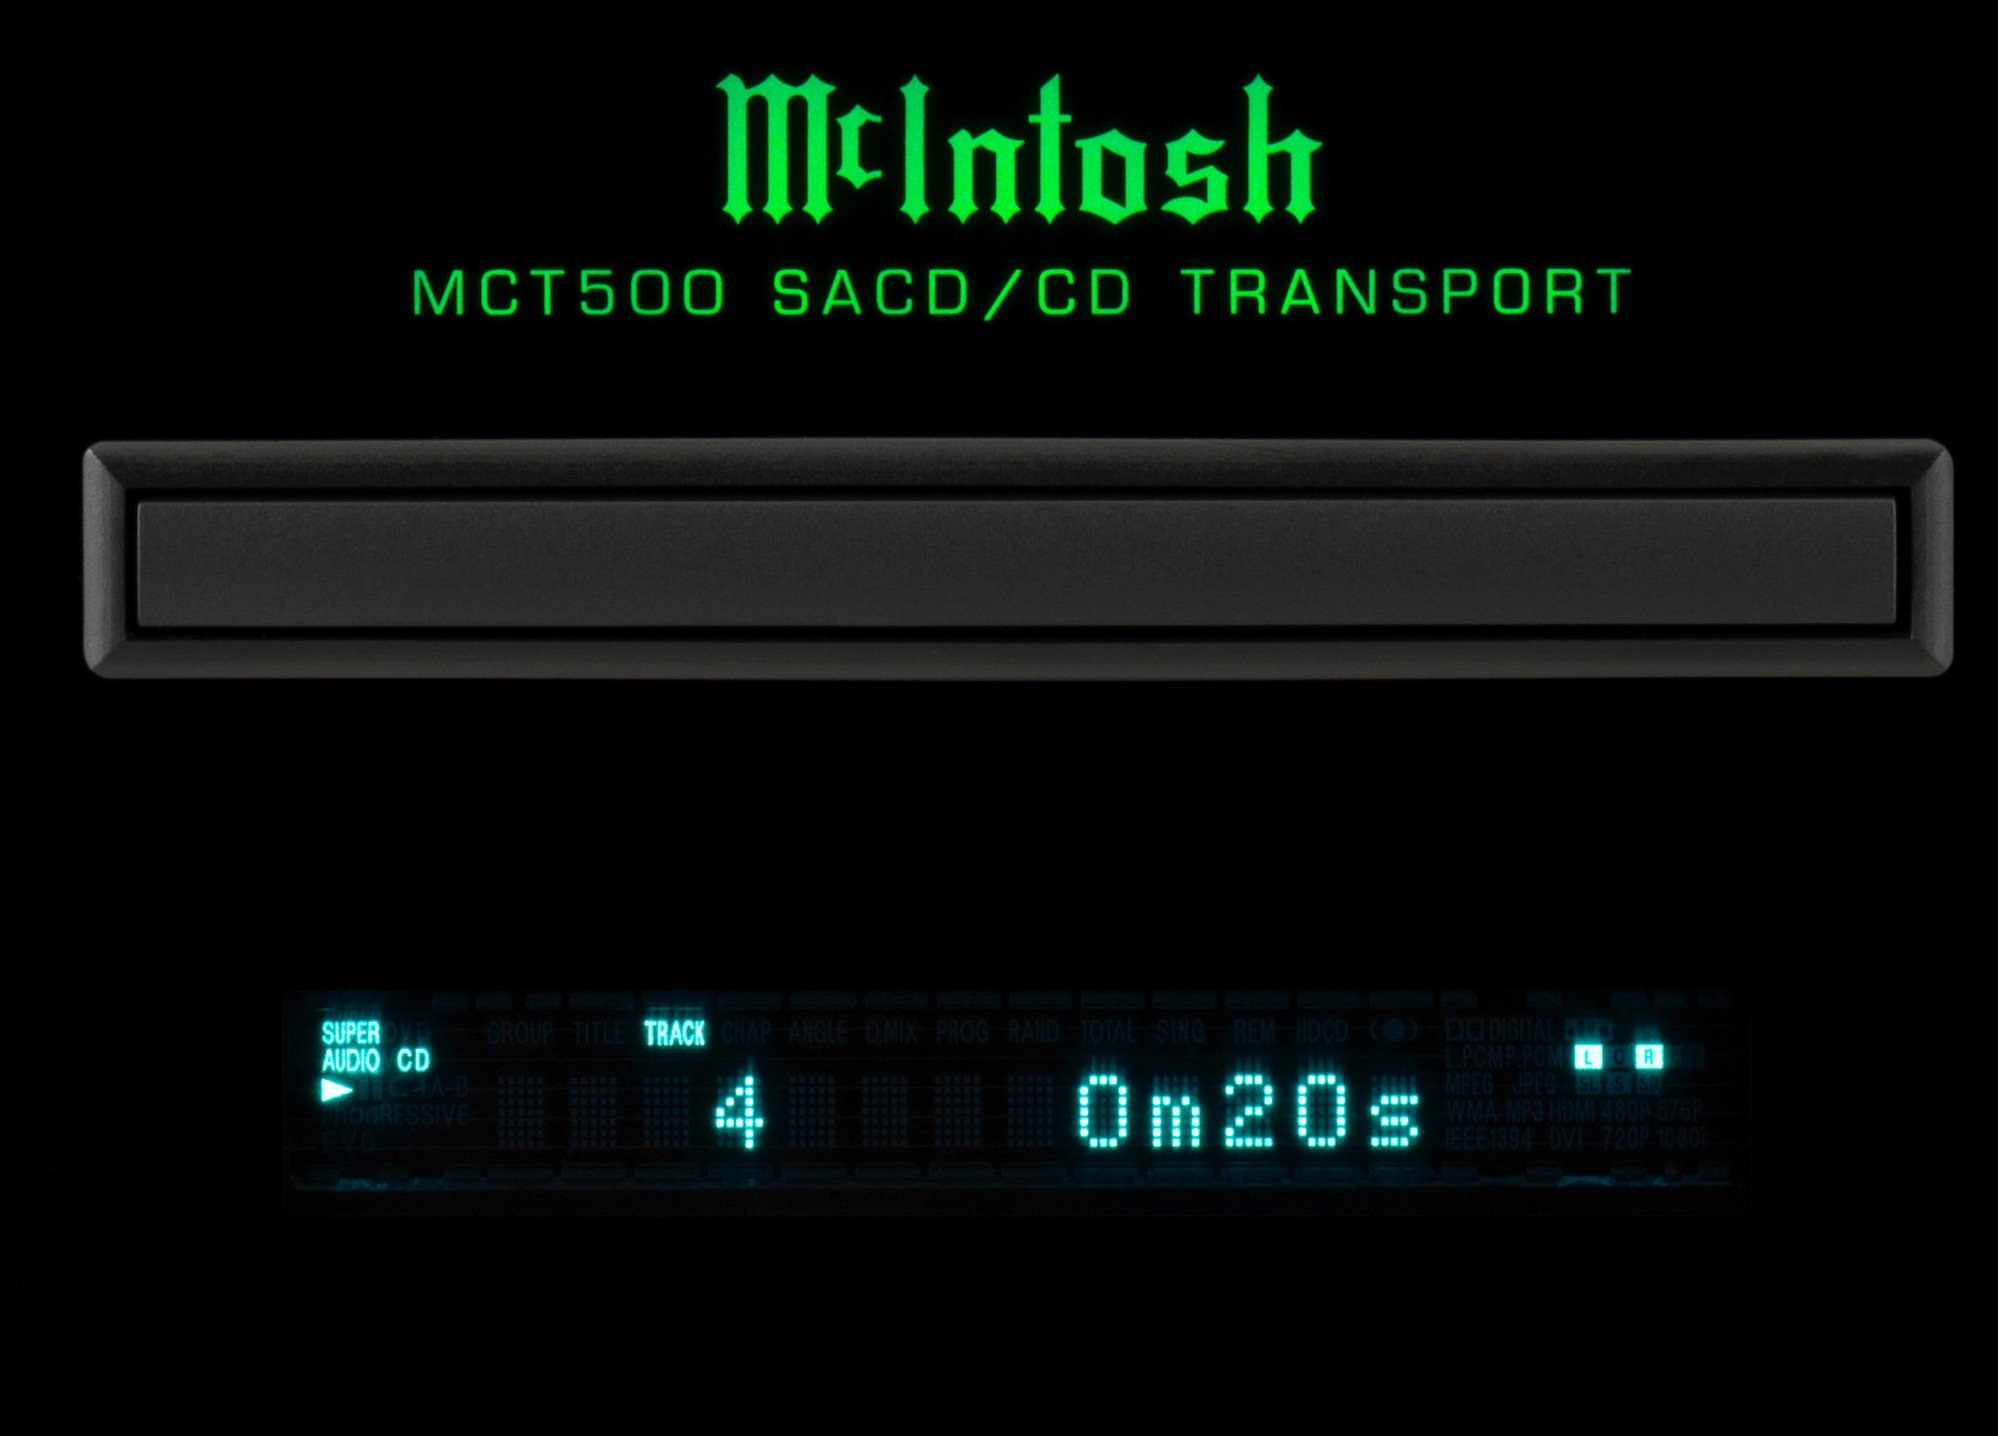 MCT500 SACD/CD transport From McIntosh